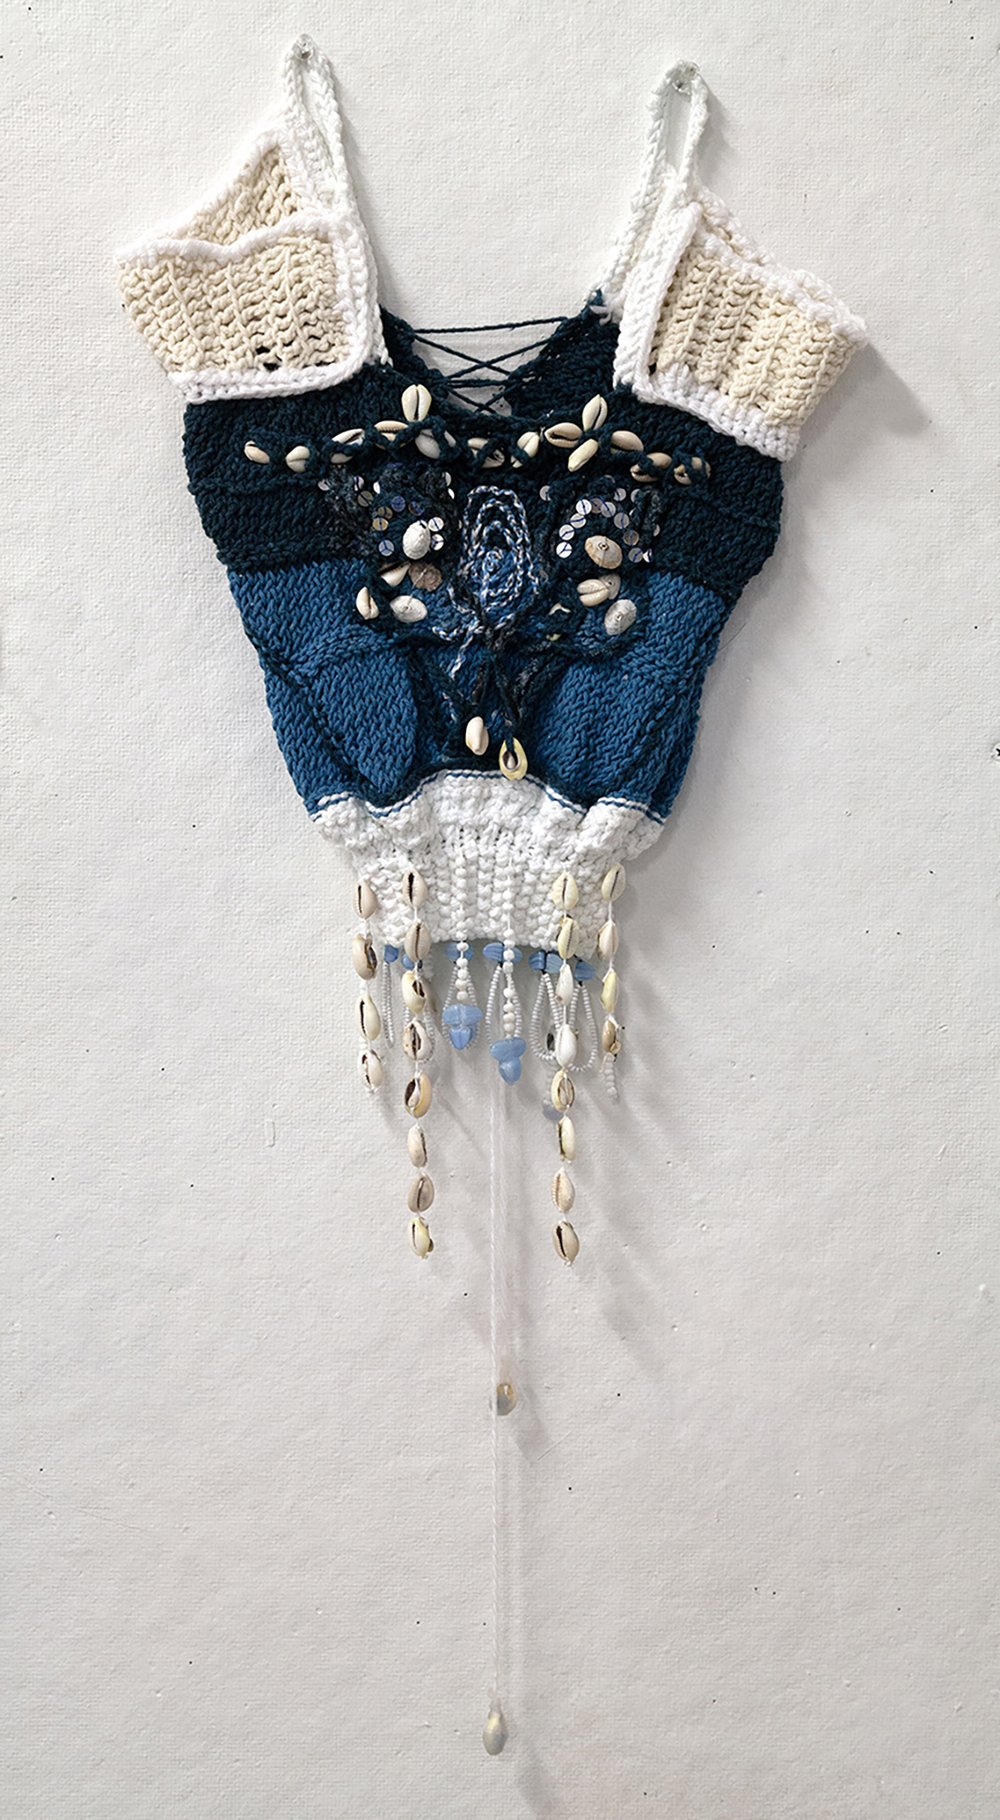  María de Los Angeles Rodríguez Jiménez,  mask i , 2022, Cotton, seashells, sequins, and wax, 14 x 10 inches. 